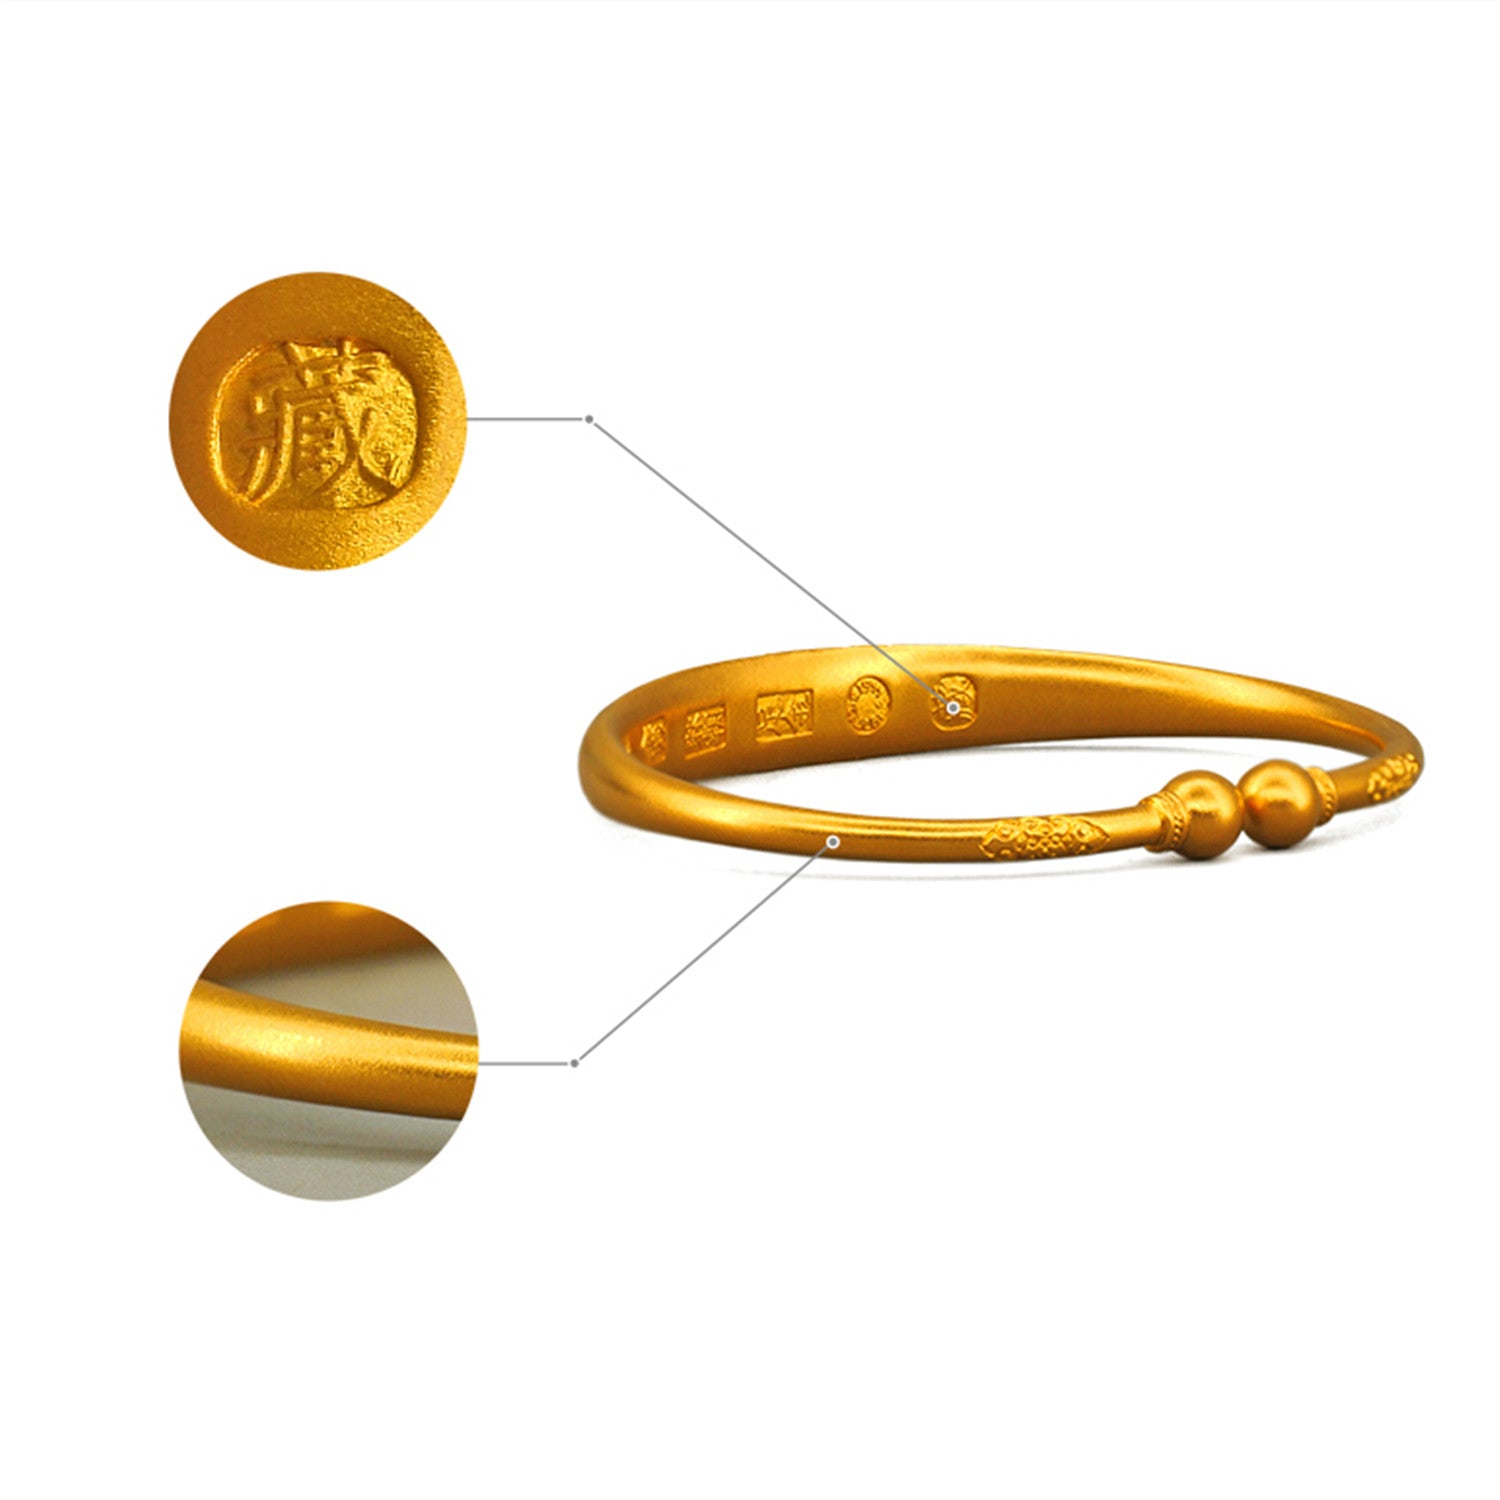 EVECOCO Full Gold Bracelet Hand Forging,Cloud Pattern,40g